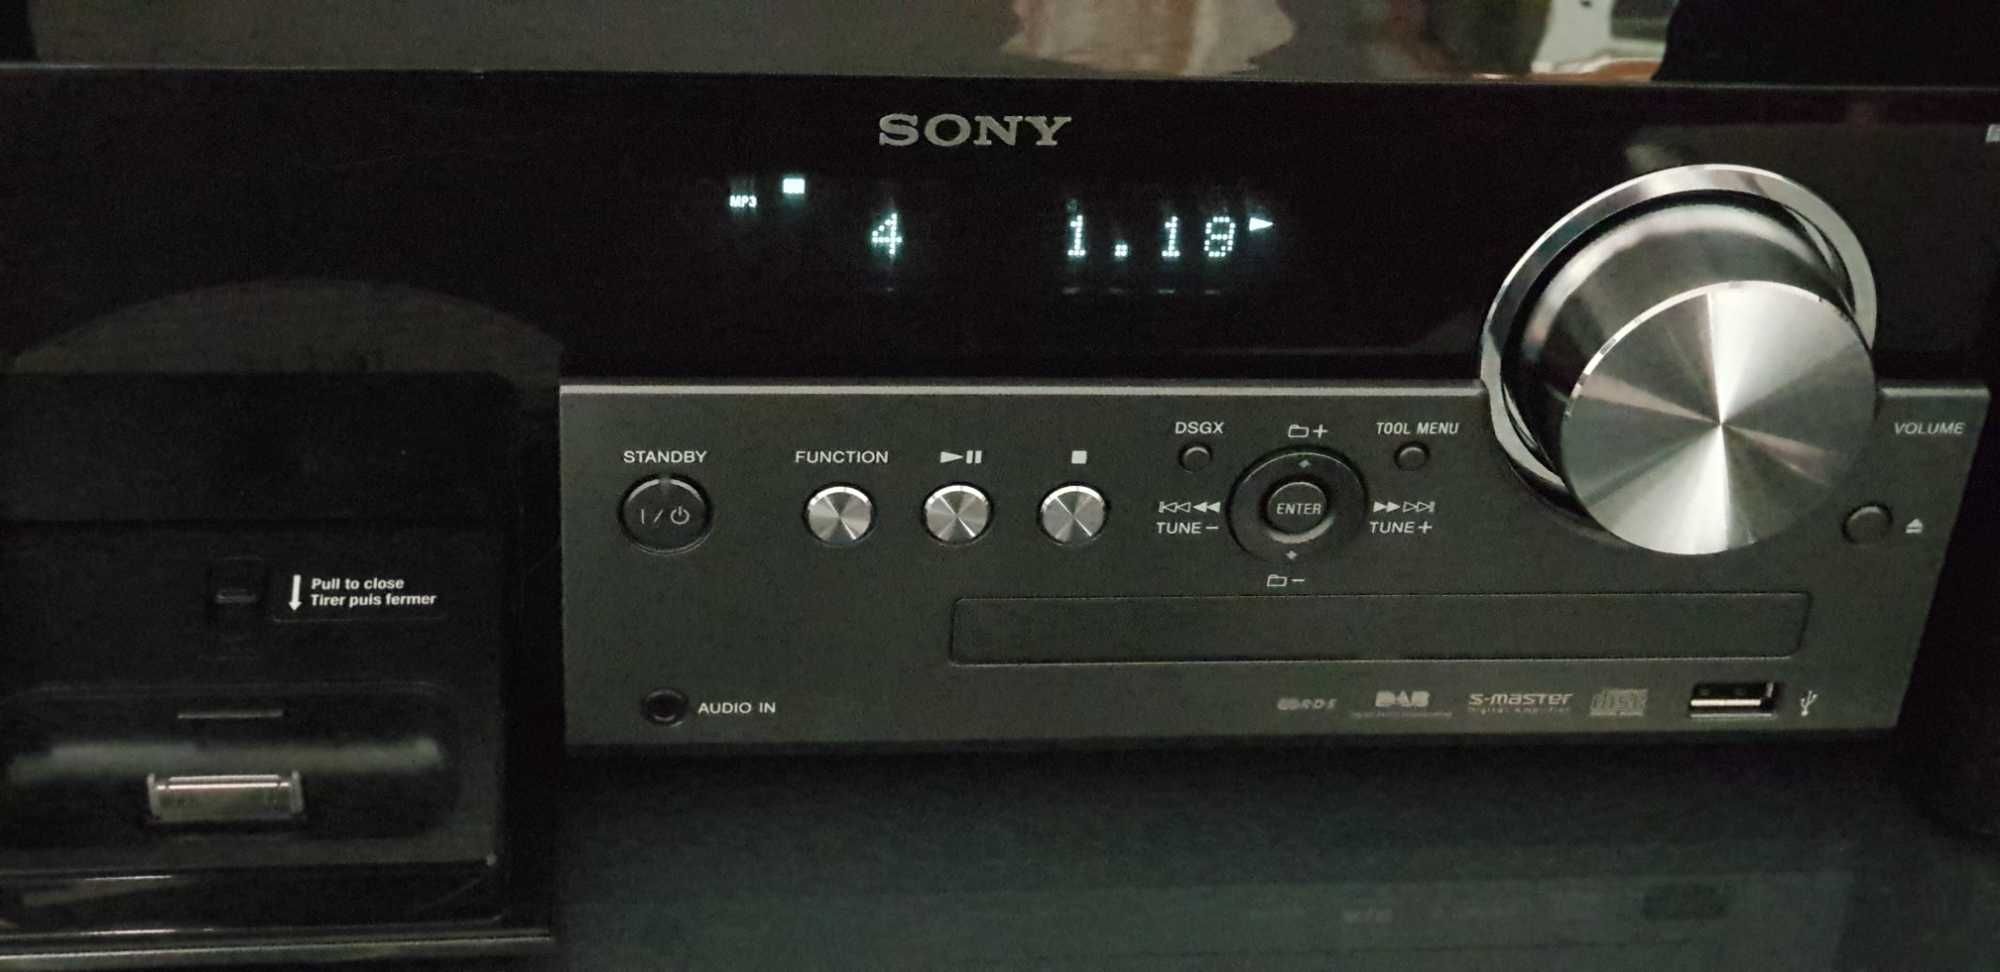 Sony HCD MX 550 i timp liber sport minisistem muzica arta